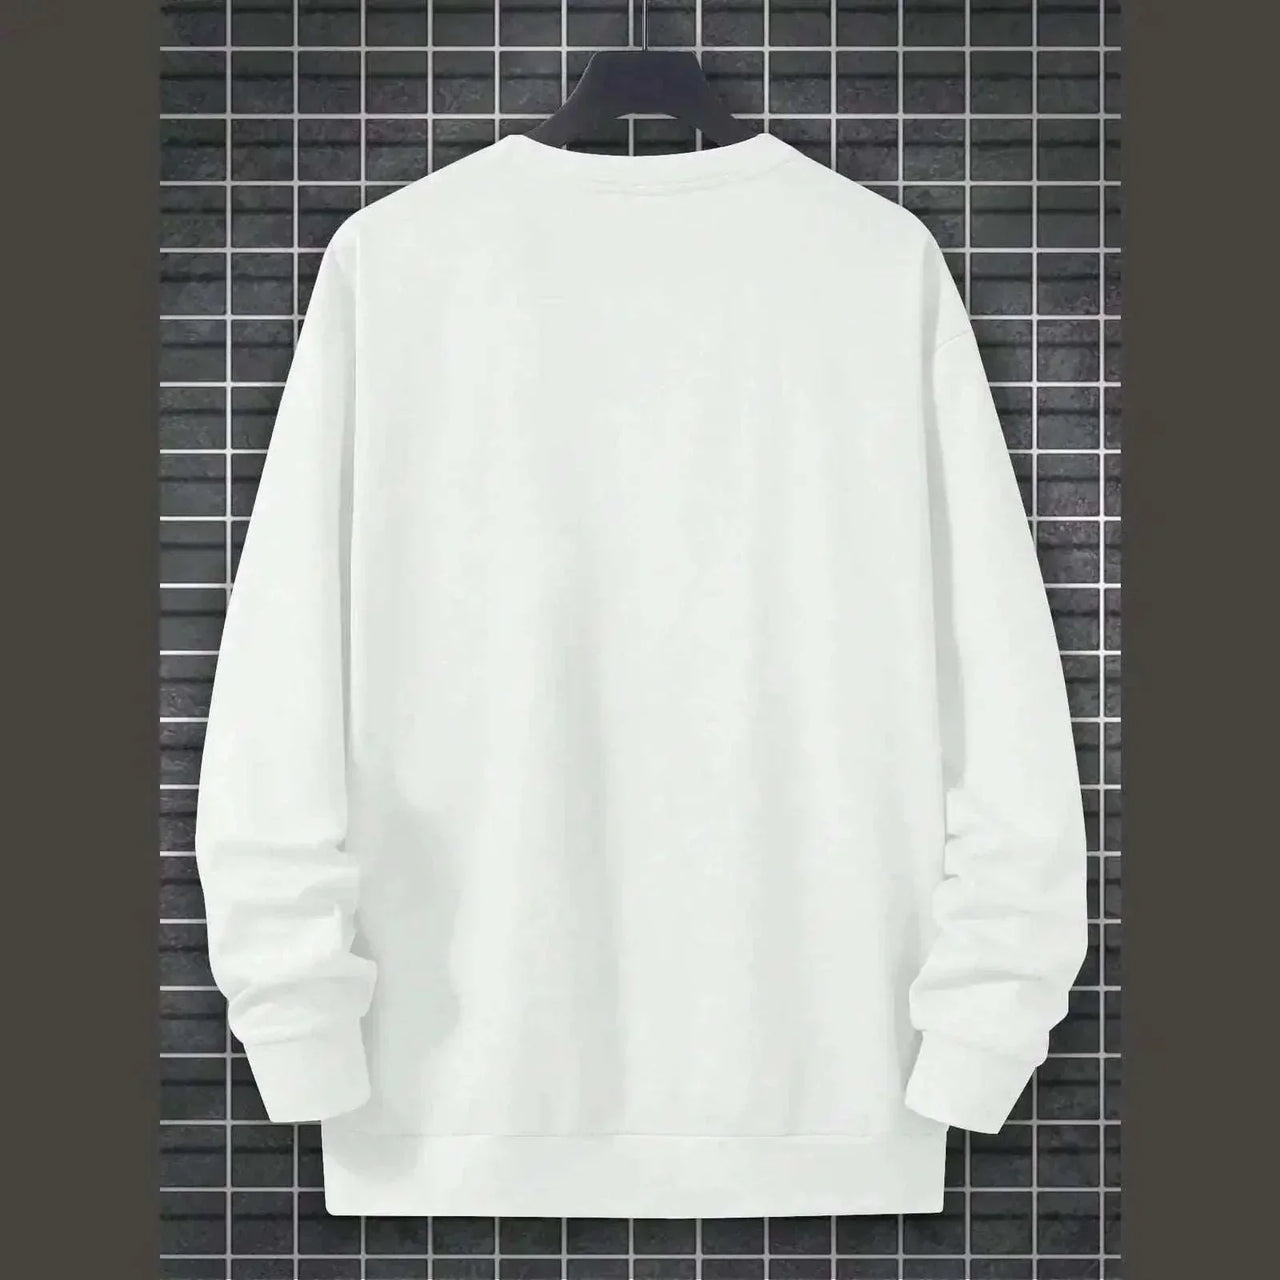 Patterned Cozy Sweatshirt - Affordable streetwear  from swagstreet wear - Just £29.99! Shop now at swagstreet wear